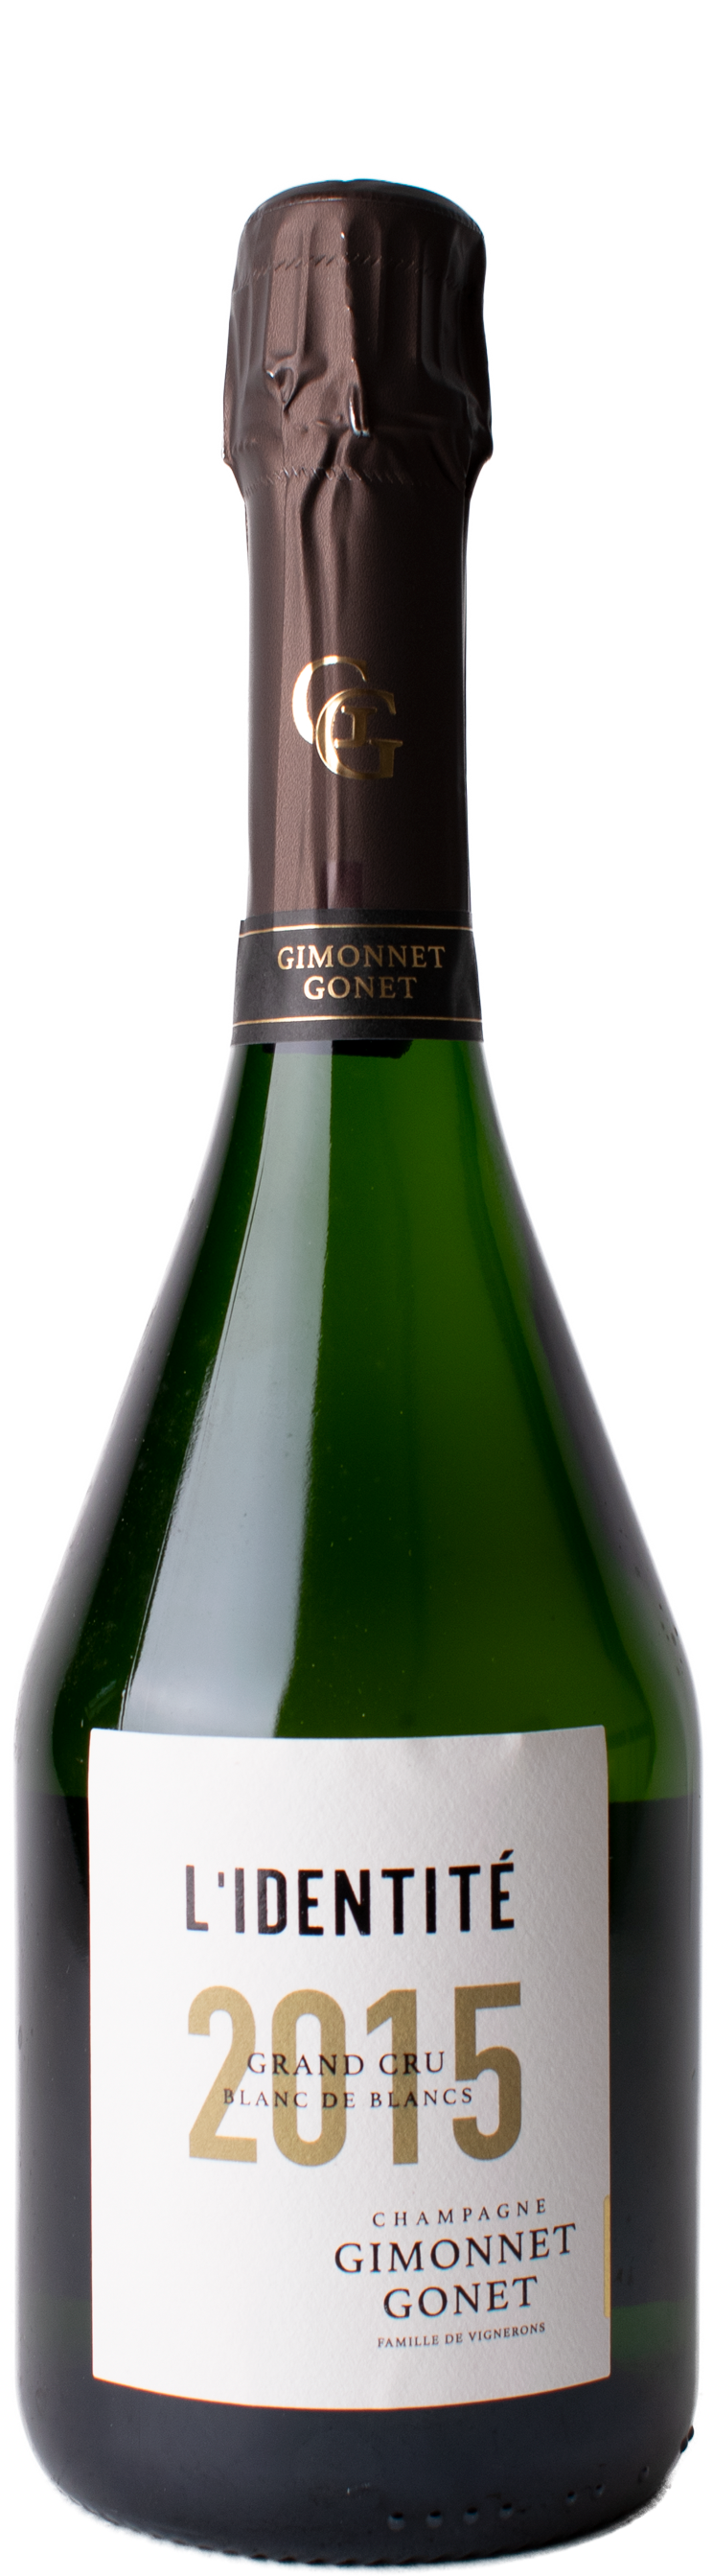 Champagne Grand Cru 2015 Identité blanc de blancs extra brut